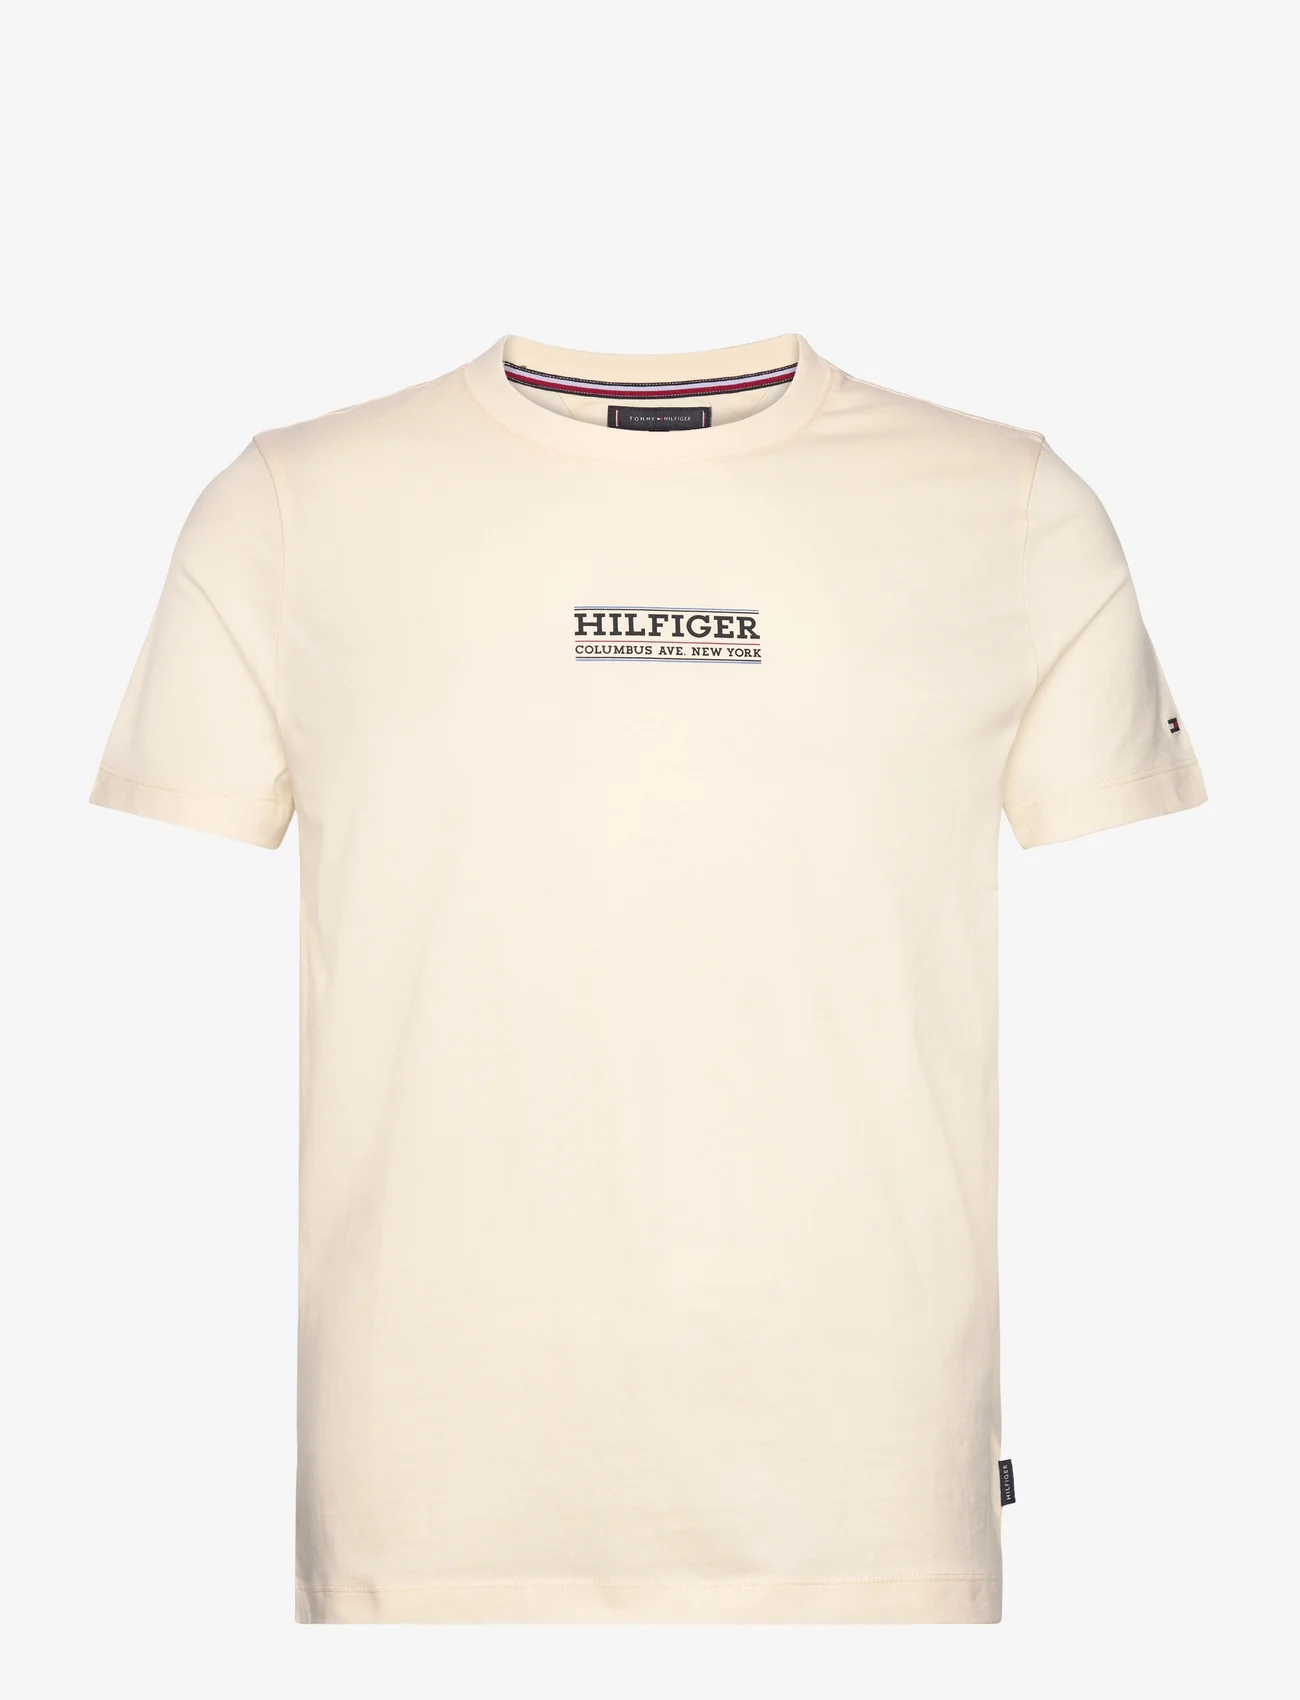 Tommy Hilfiger - SMALL HILFIGER TEE - basic t-shirts - calico - 0